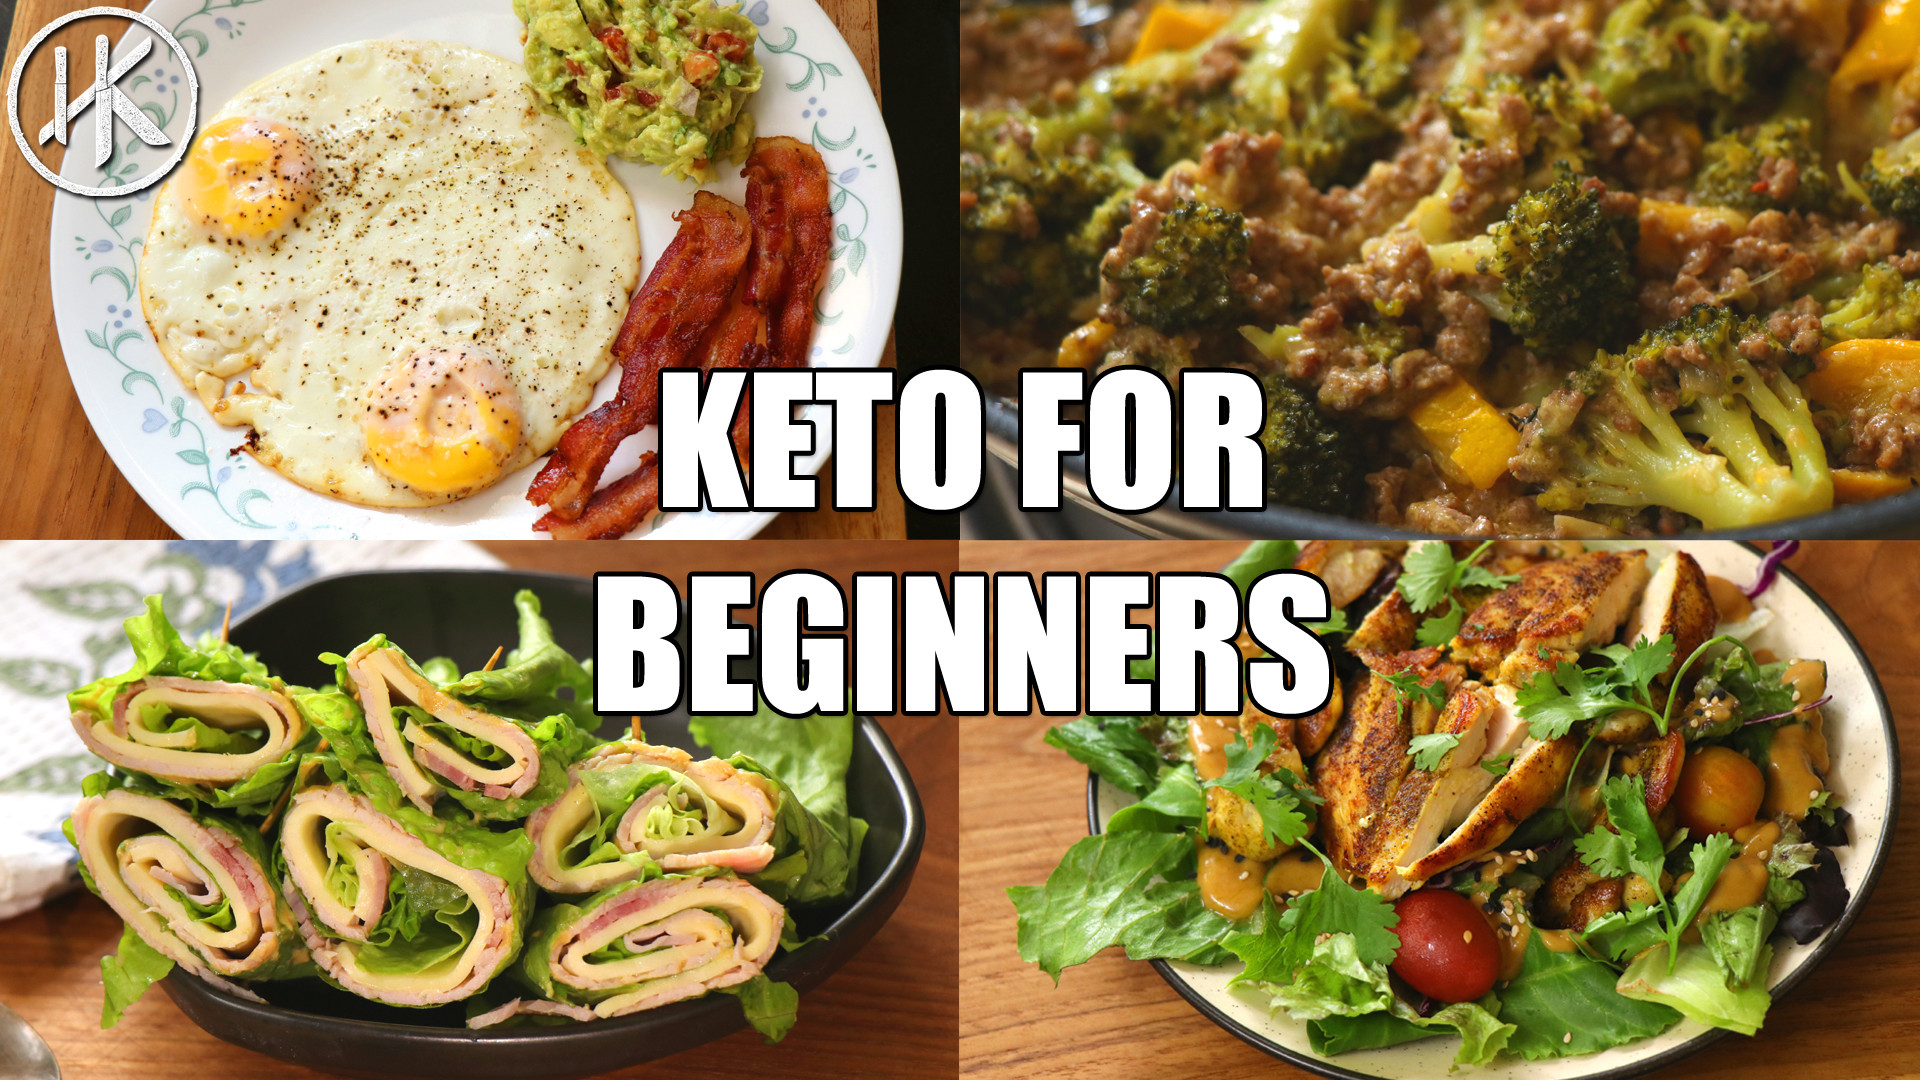 Keto Breakfast Ideas For Beginners
 Keto for Beginners Free Keto Meal Plan Headbanger s